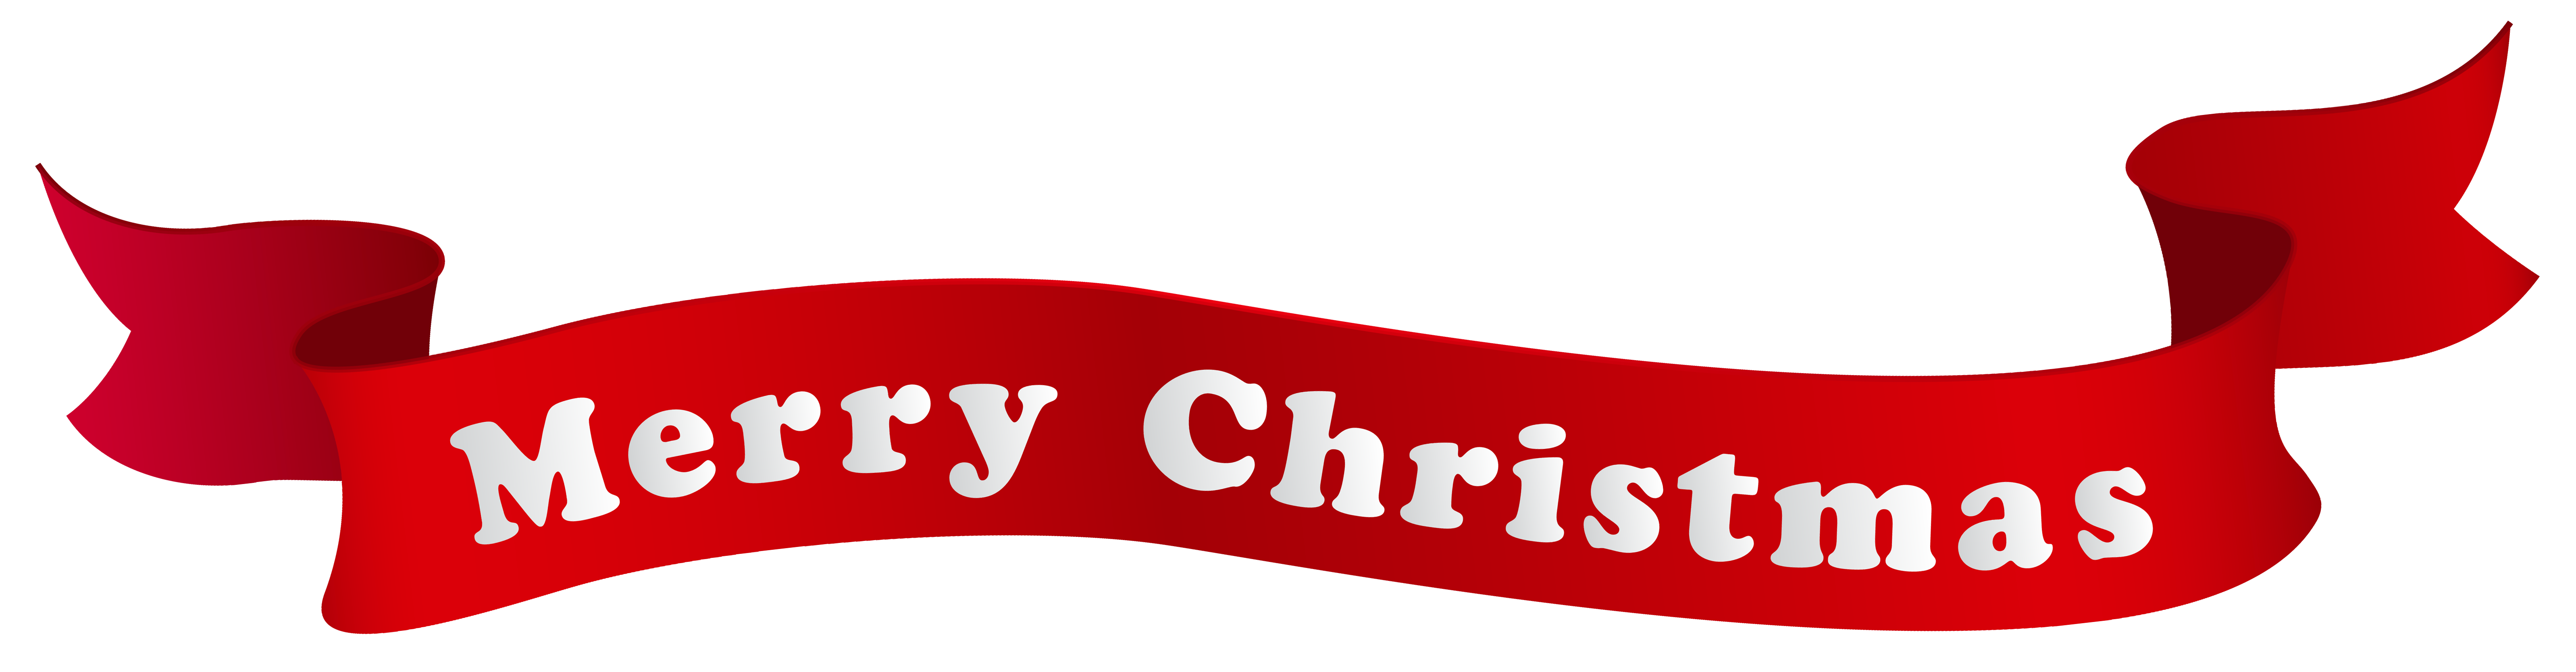 Free Transparent Christmas Banner, Download Free Transparent Christmas ...